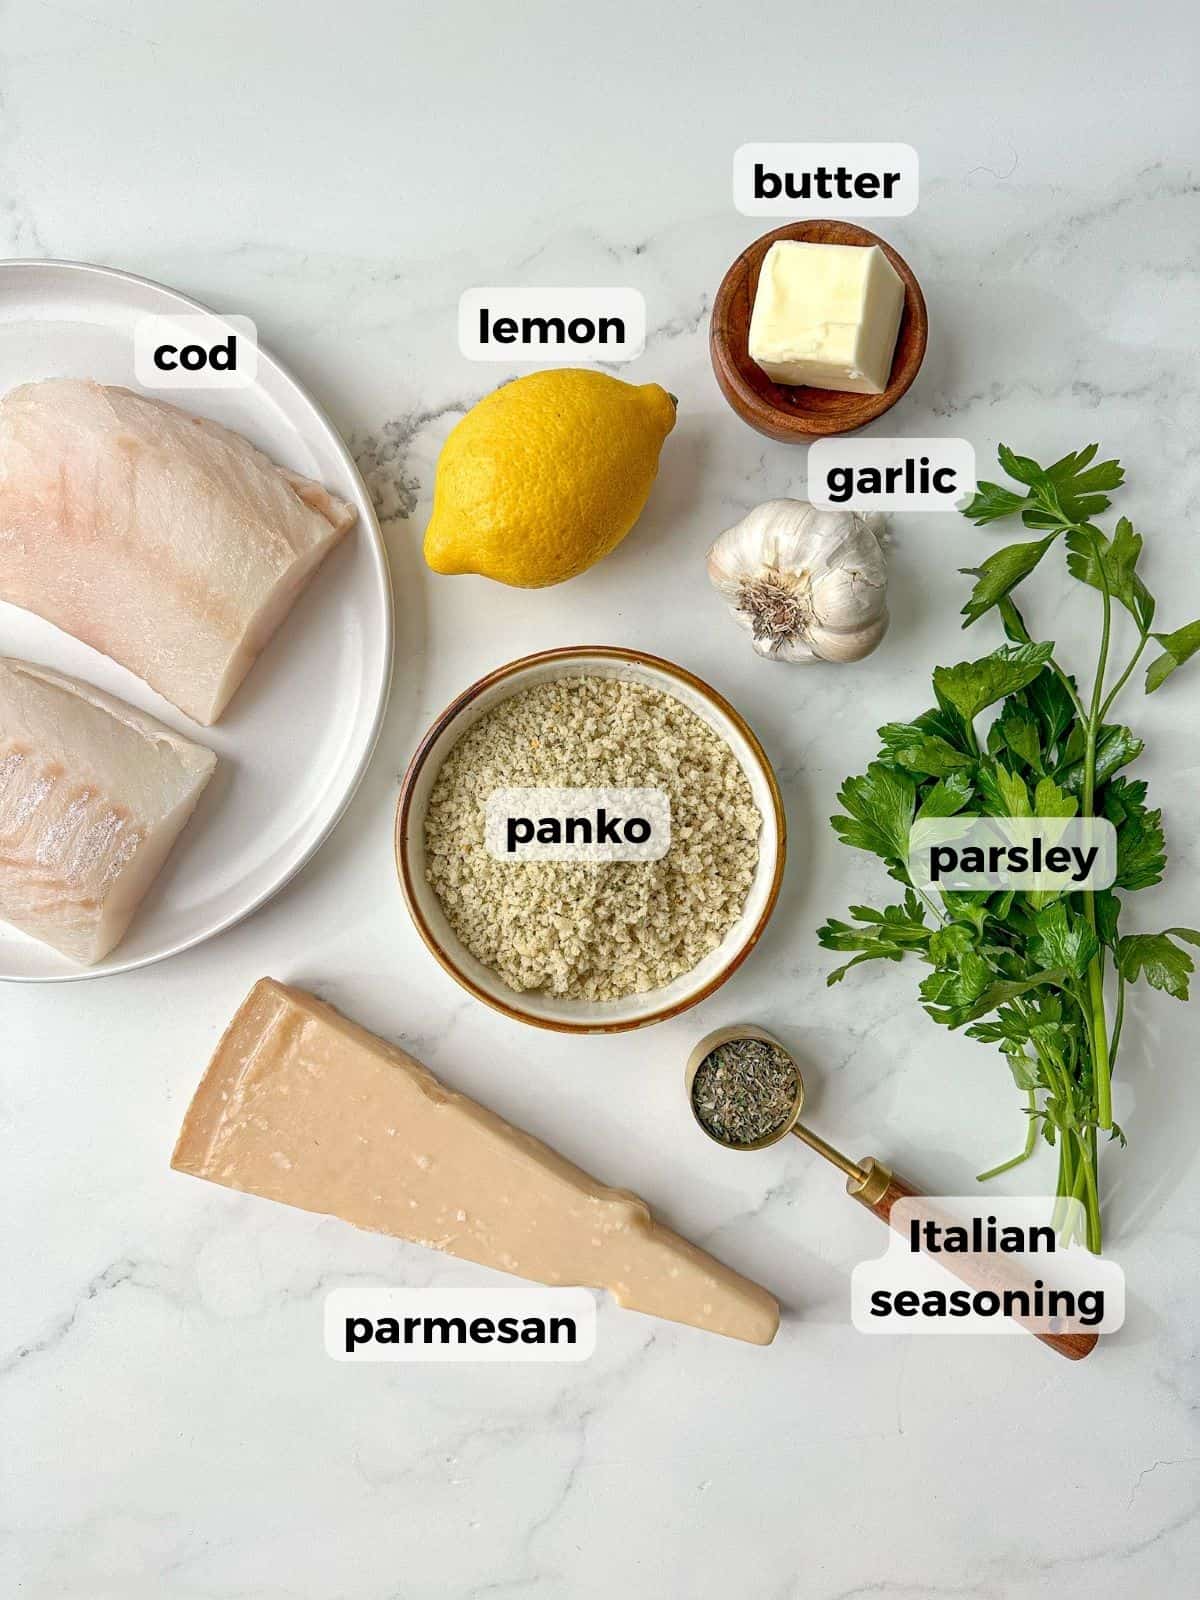 Ingredients needed to make this recipe include: cod, panko, parmesan, lemon, garlic, butter, parsley, and Italian seasoning.